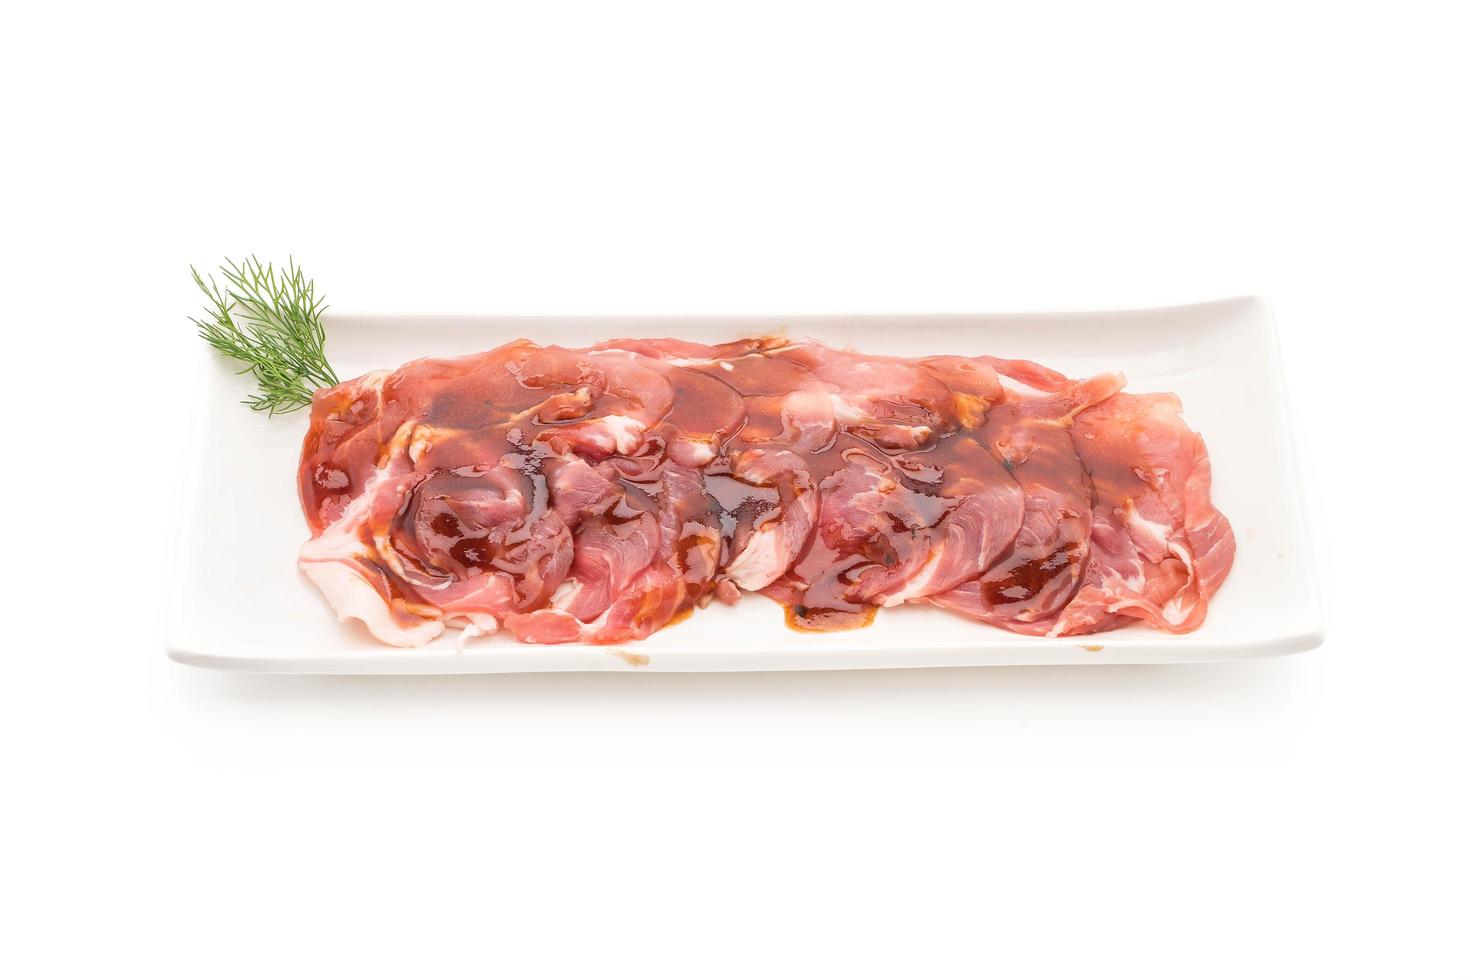 vers varkensvlees gesneden met saus op witte achtergrond foto